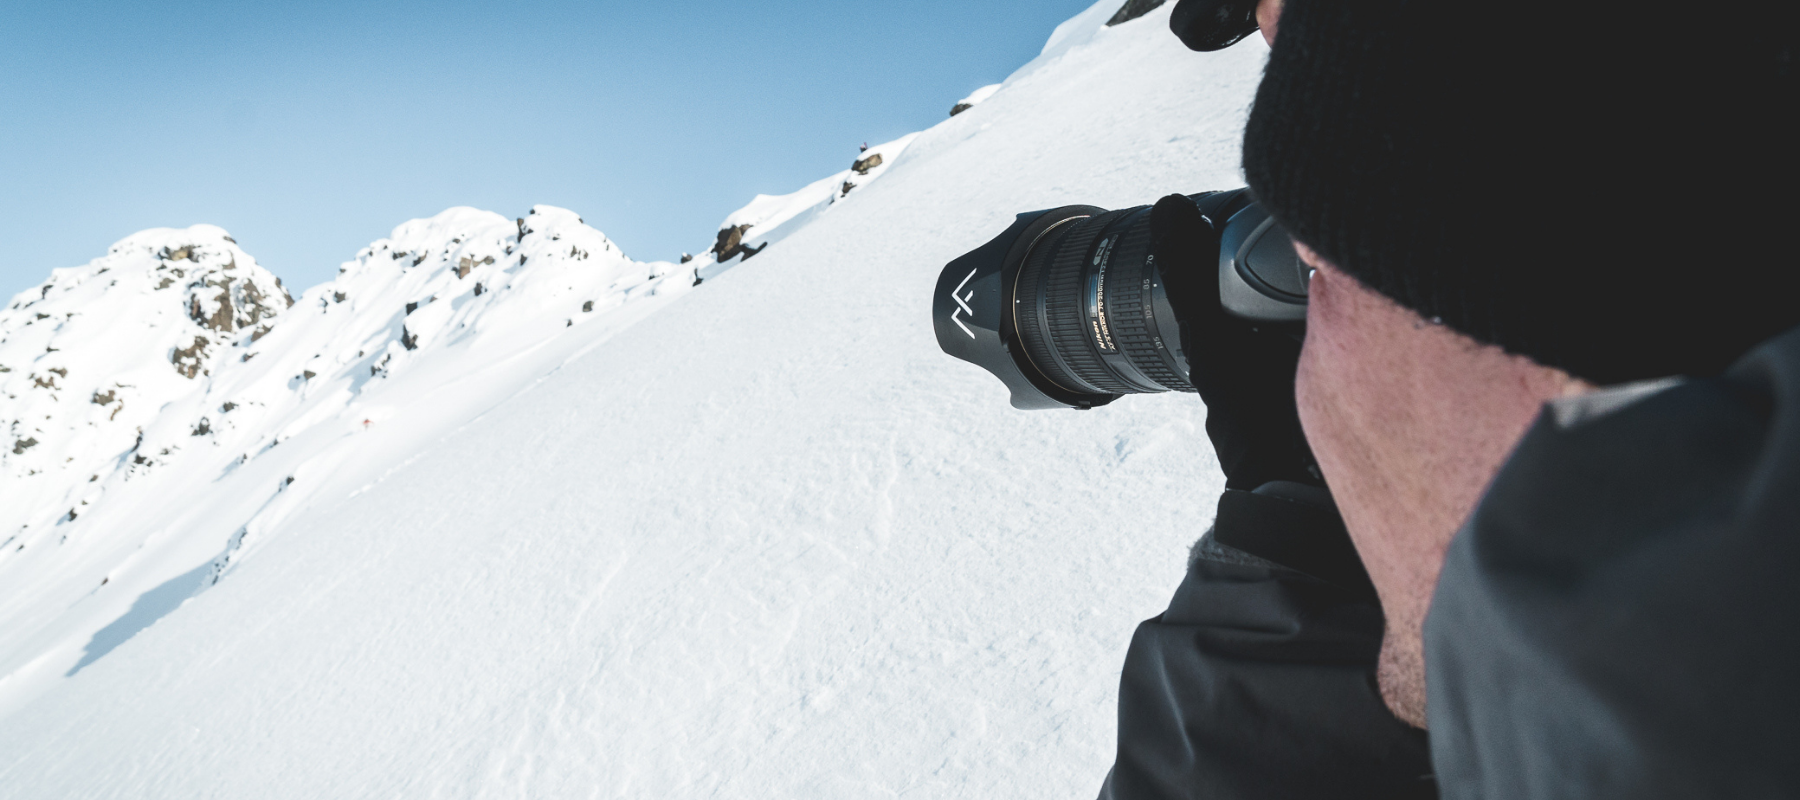 Understanding Focal Length for Winter Photography